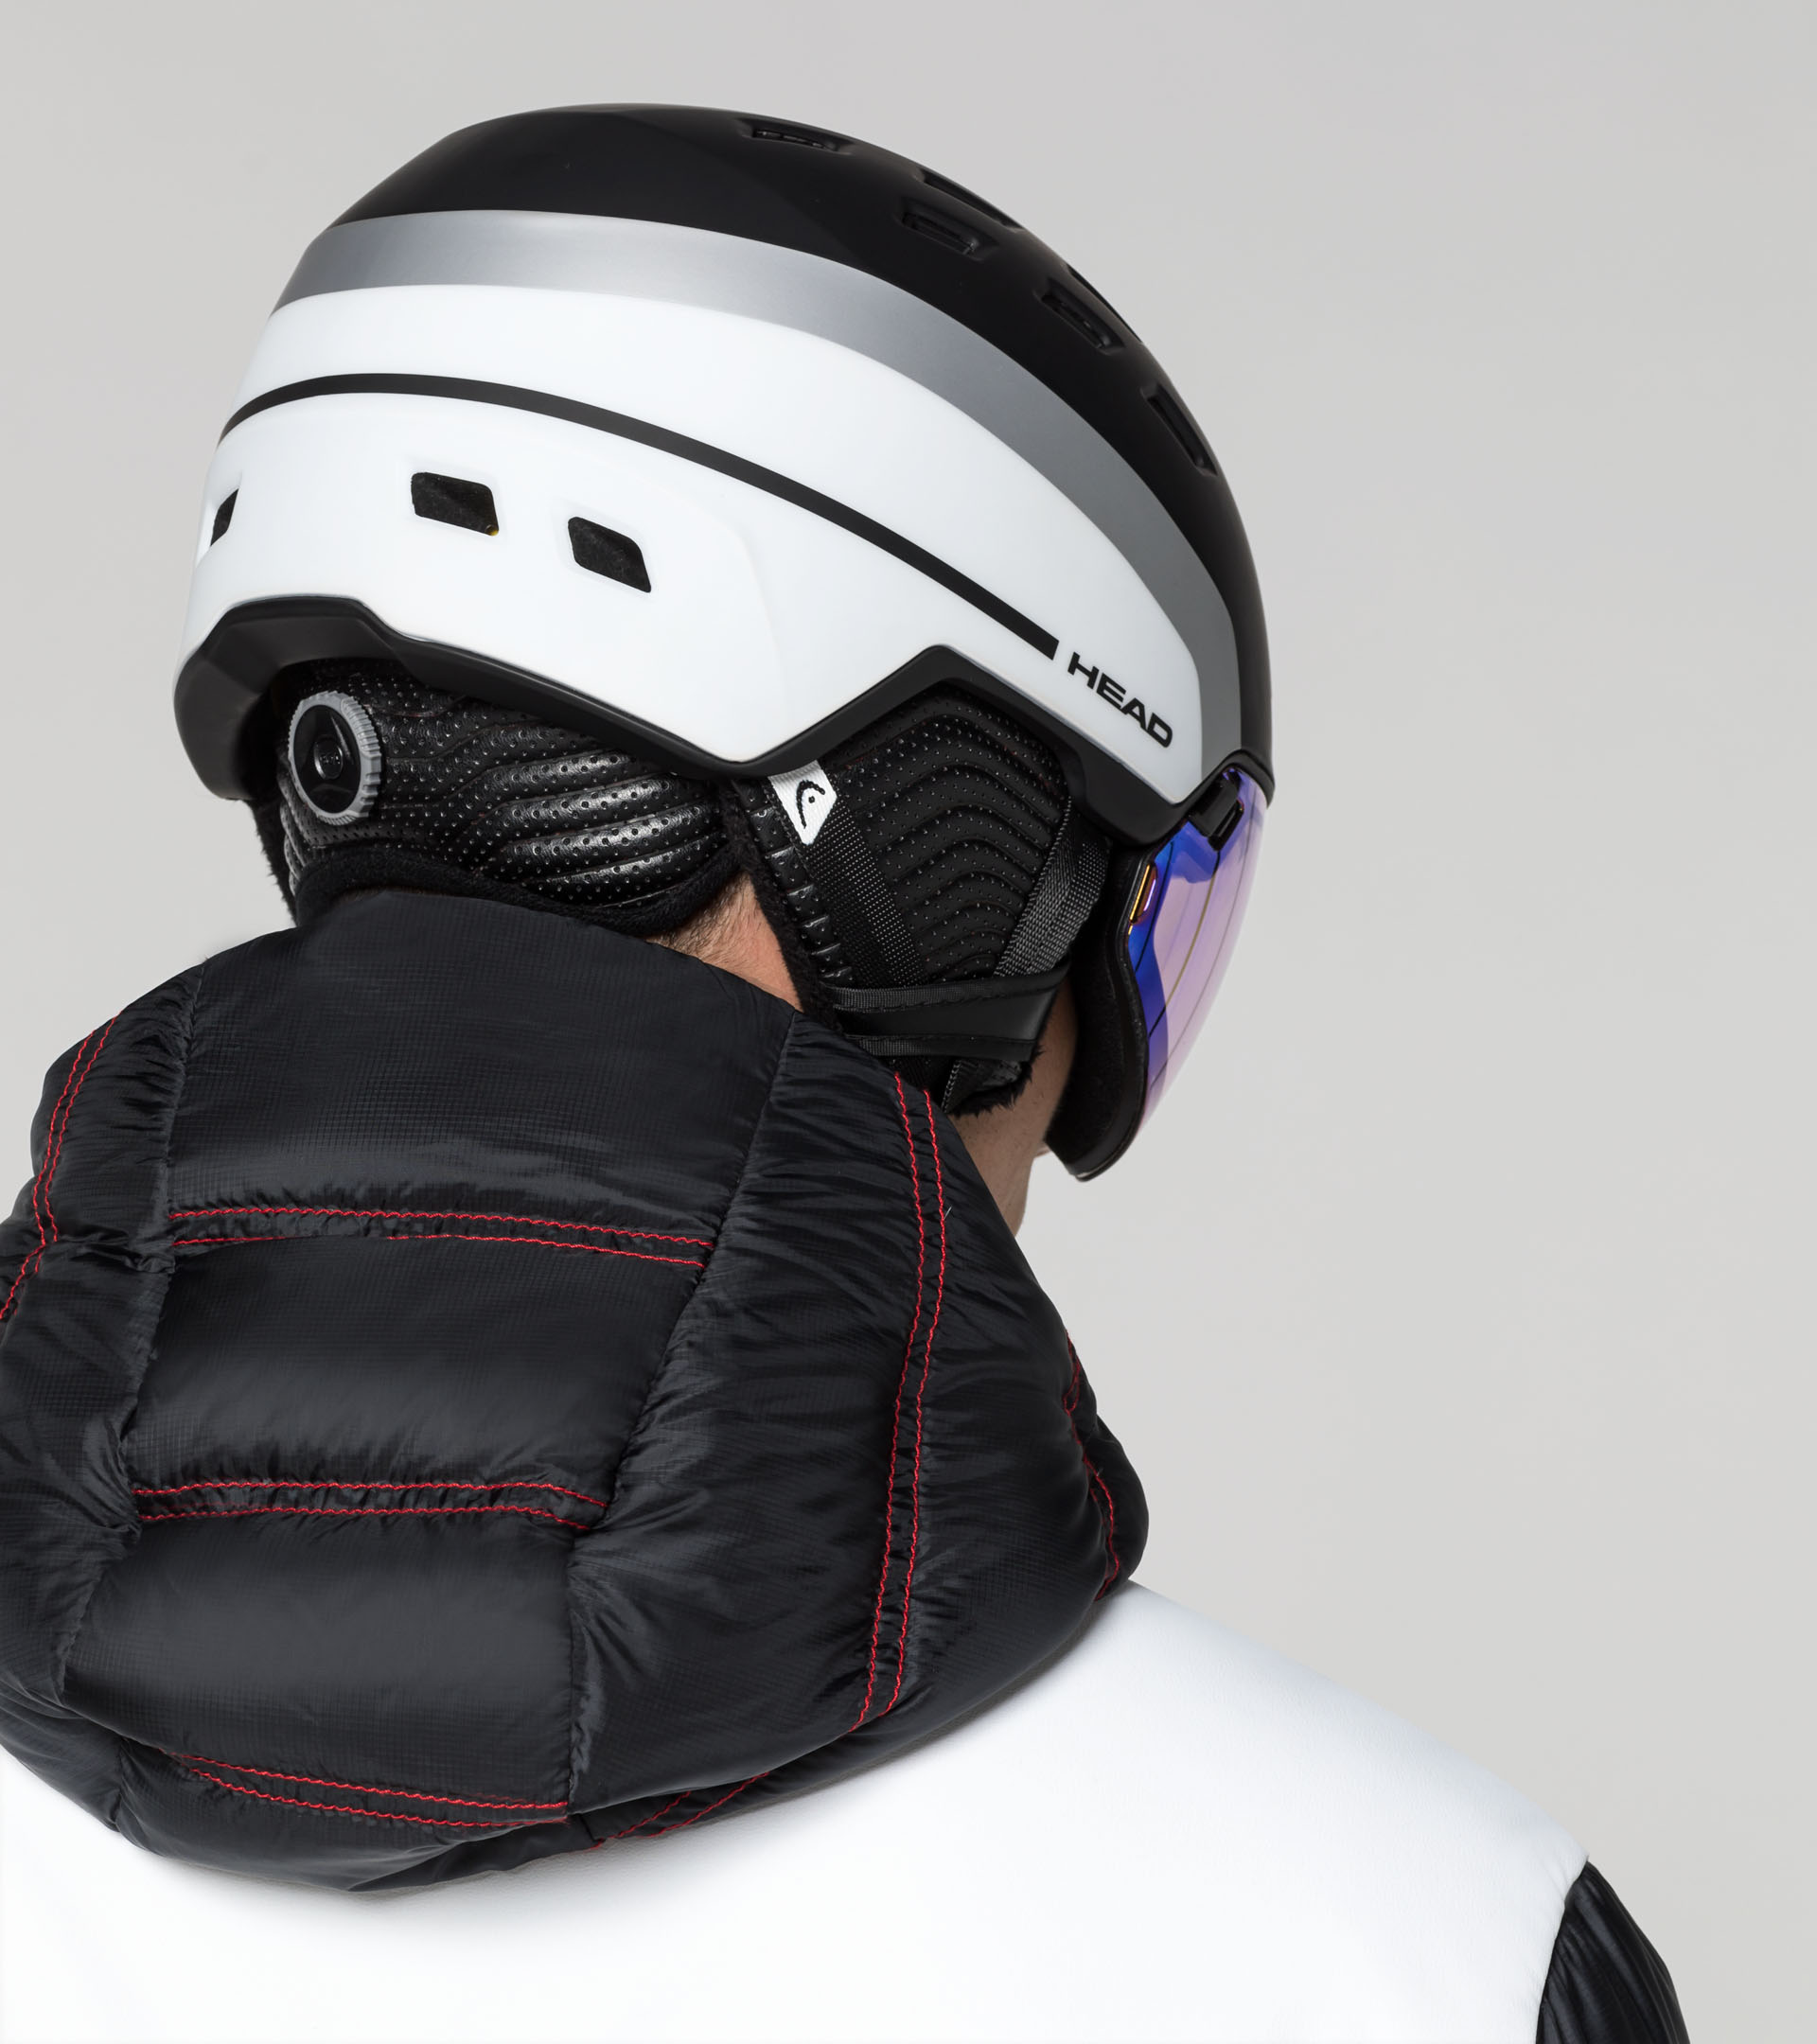 HEAD Radar Helmet - Sports Accessories for Men